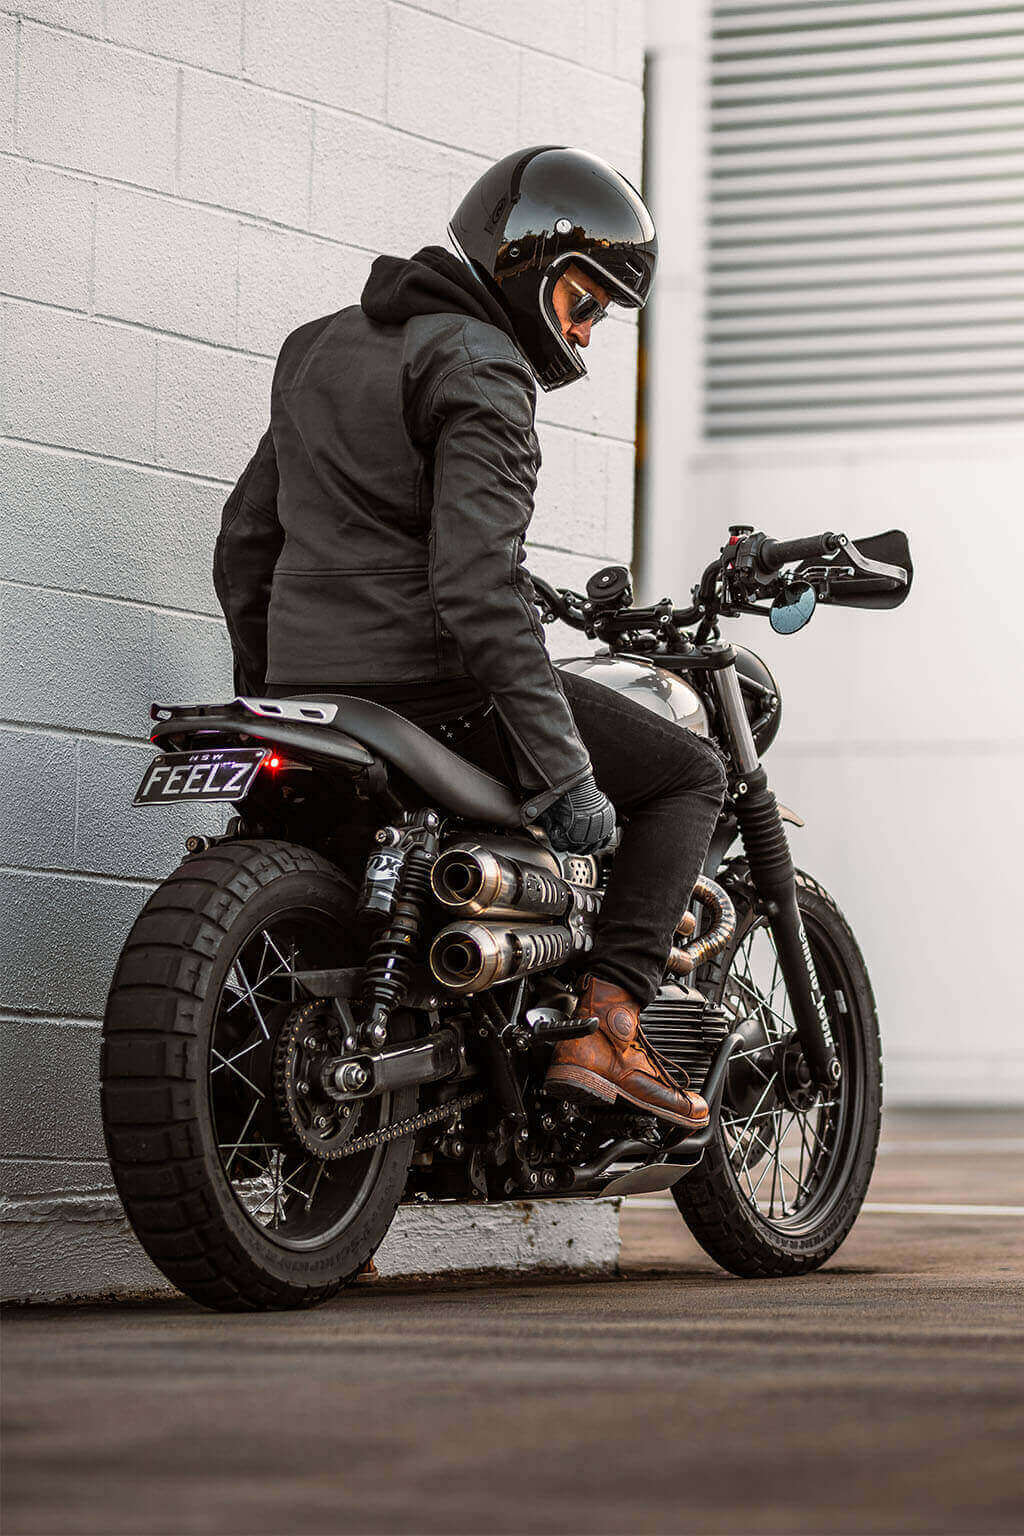 Andromeda Moto | Motorcycle gear with aerospace technology. 100% vegan